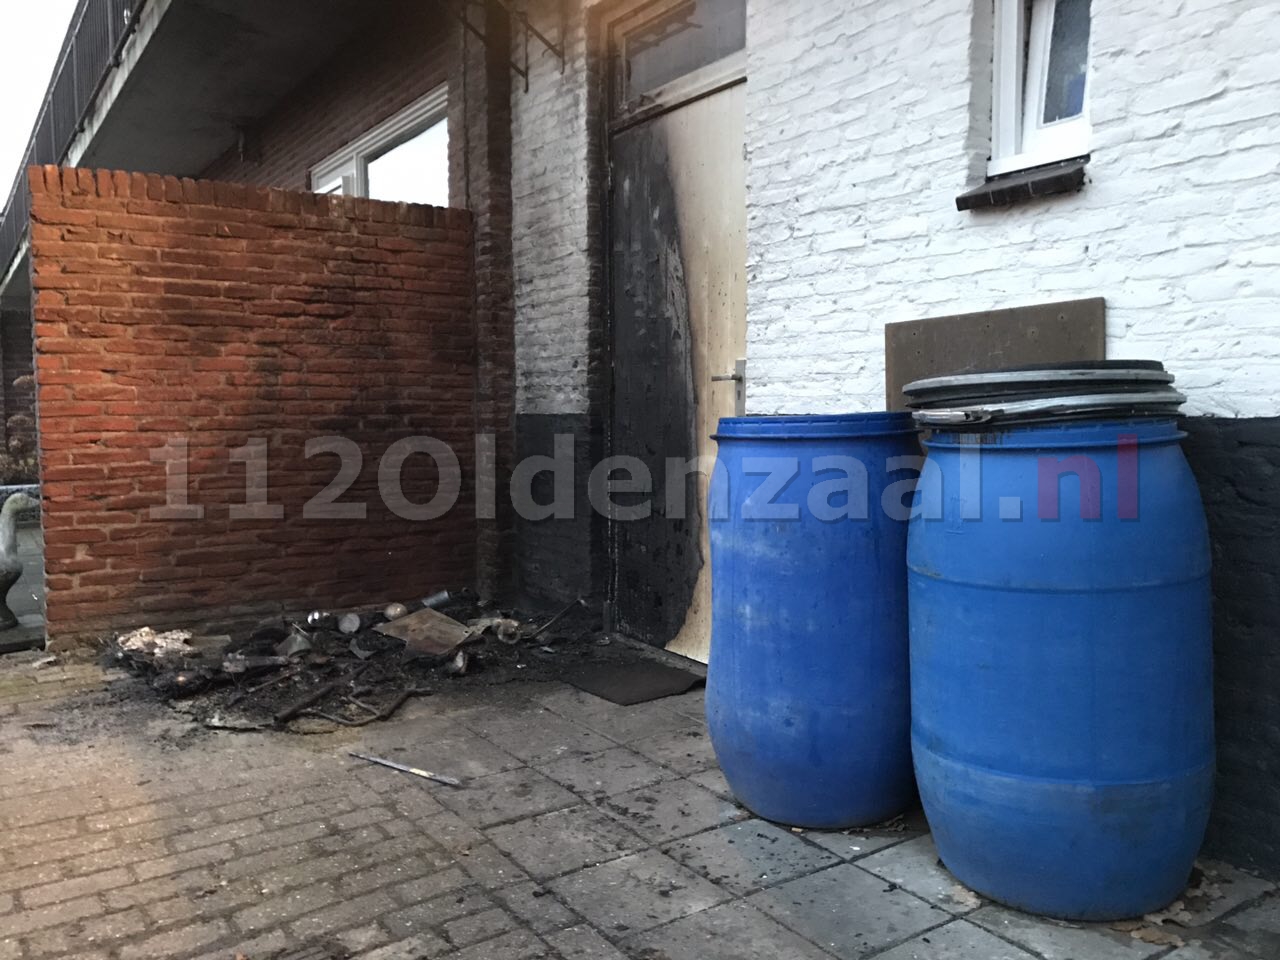 Foto: Flinke schade na brand achter cafetaria Oldenzaal